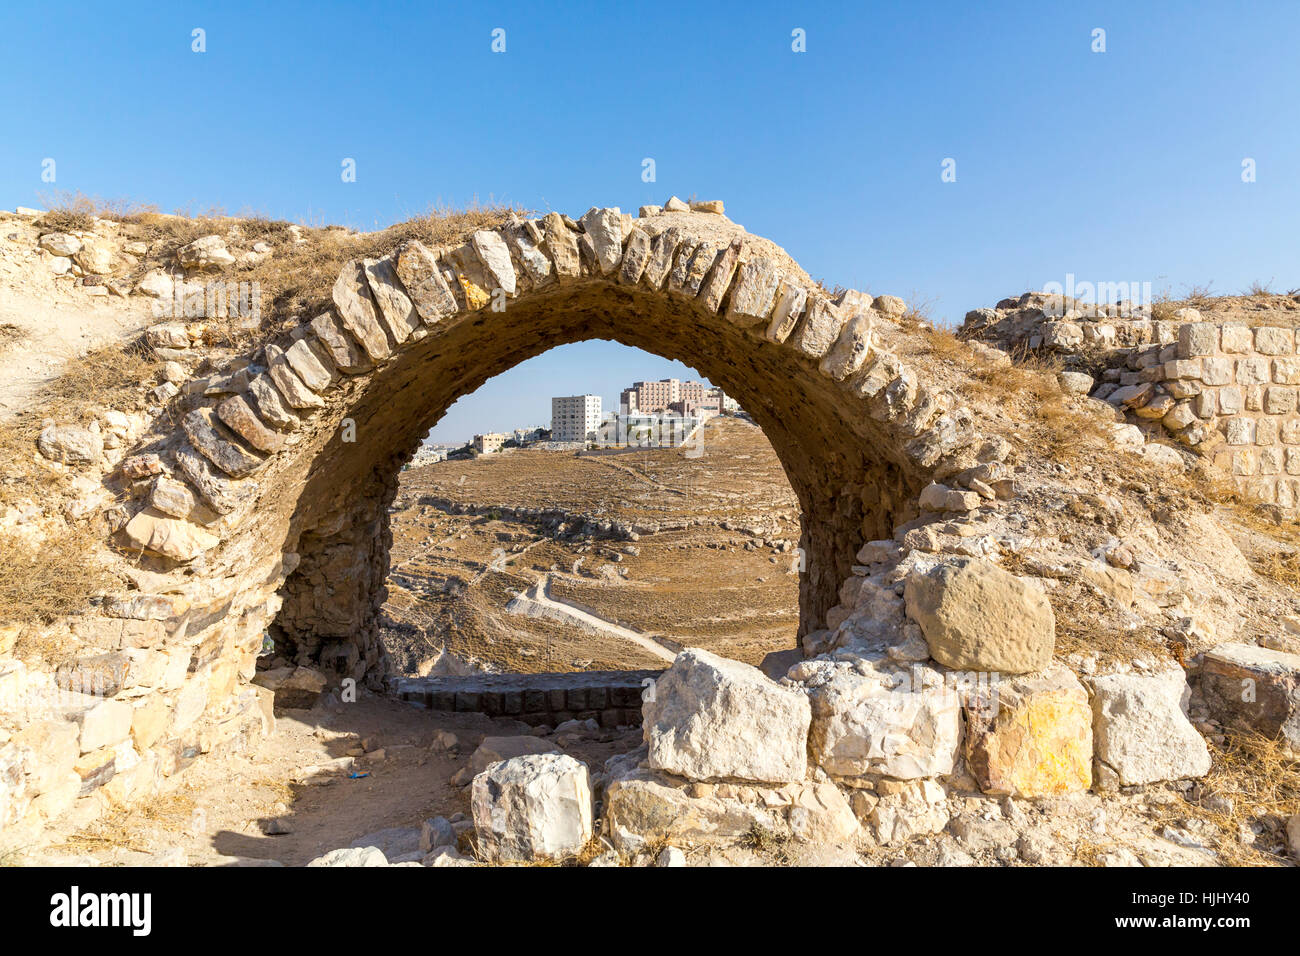 Jordan, Al-Karak, Kerak Crusader castle, view through archway on modern buildings Stock Photo